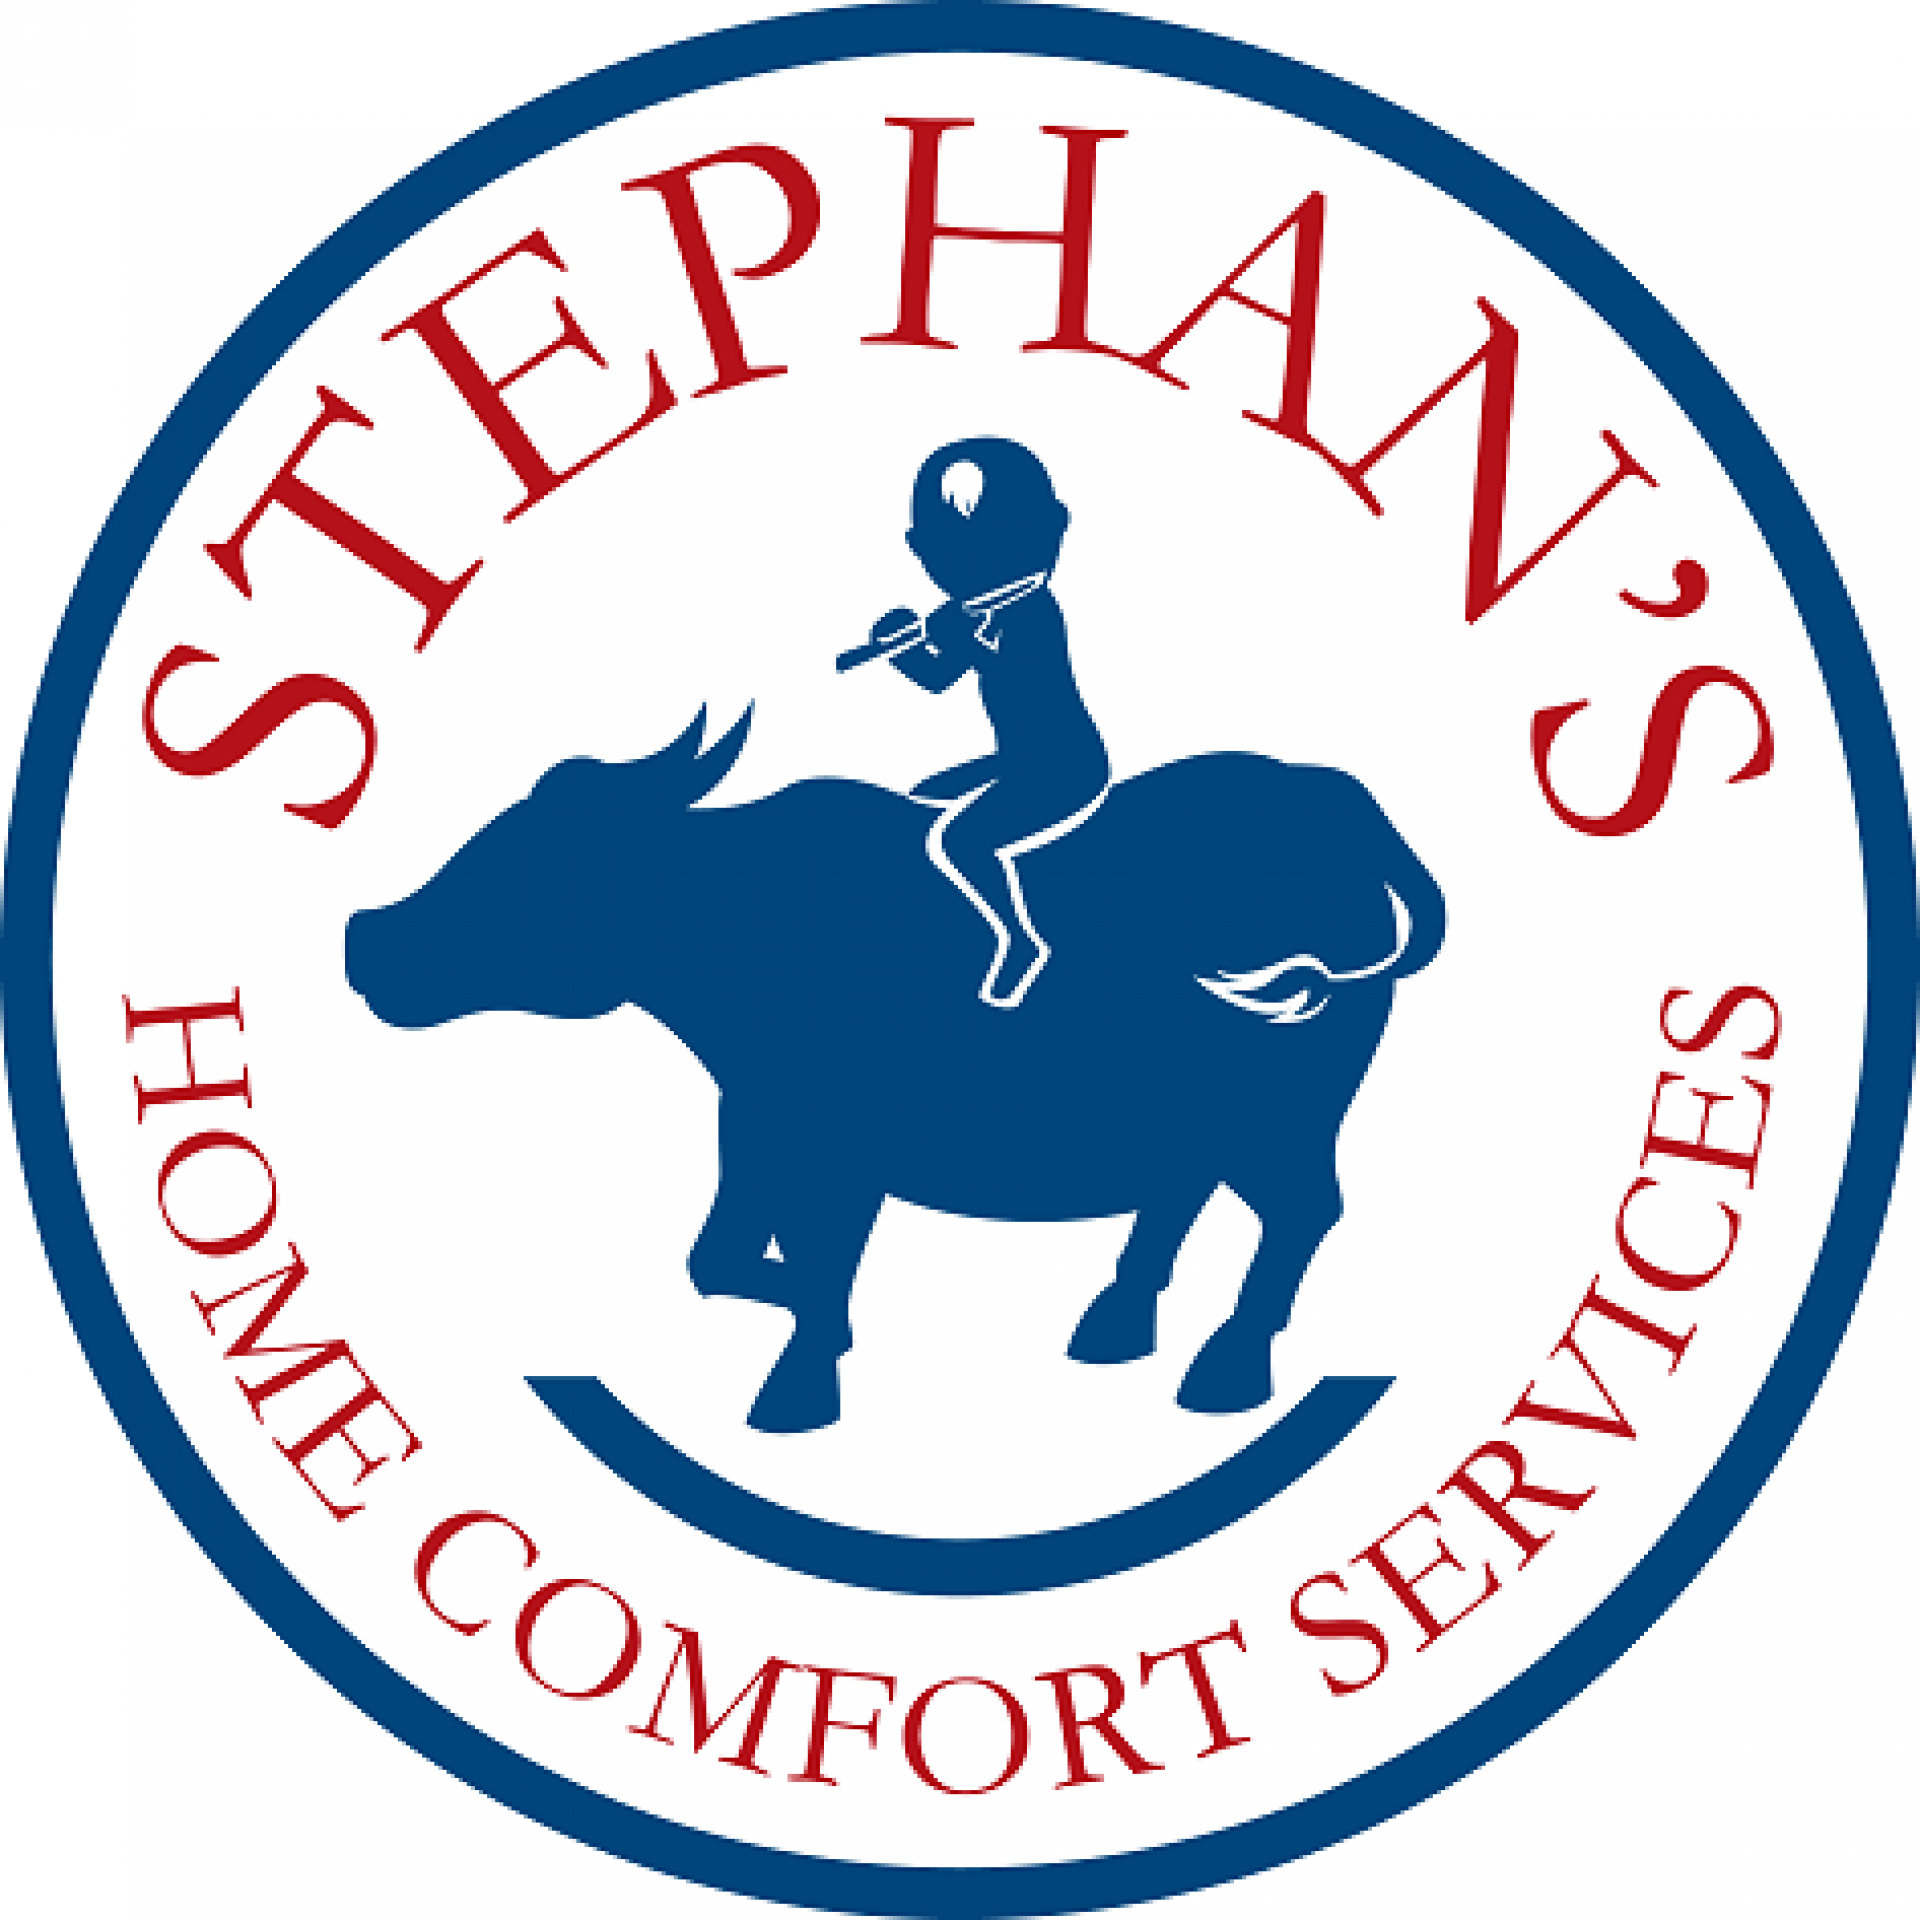 Stephan's Home Comfort Services company logo